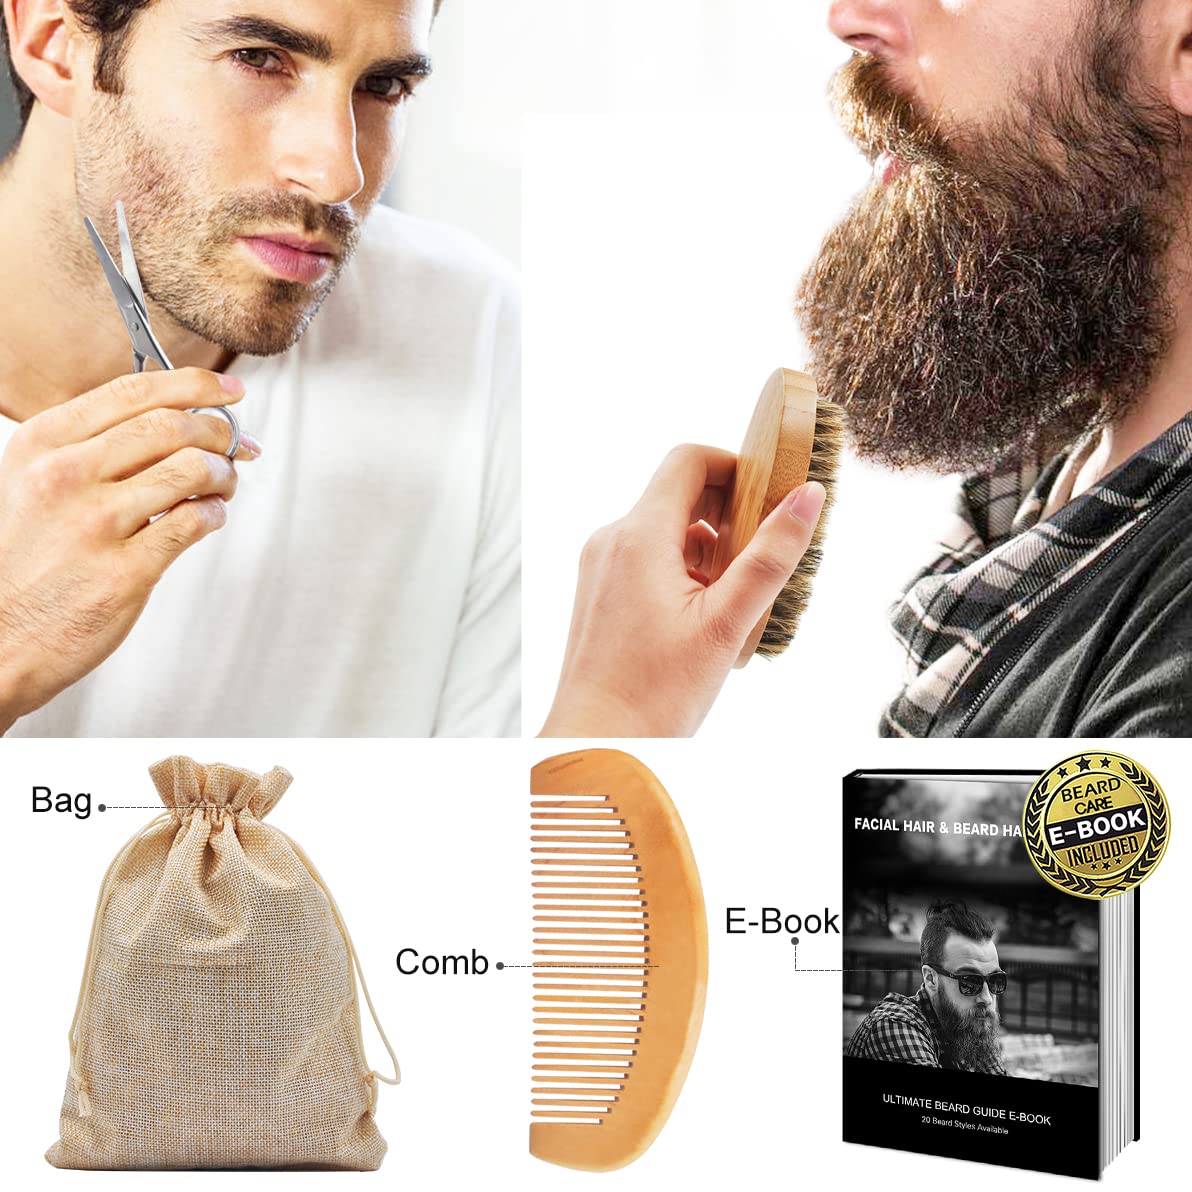 Upgraded Beard Grooming Kit W/Beard Conditioner,Beard Oil,Beard Balm,Beard Brush,Beard Shampoo/Wash,Beard Comb,Beard Scissors,Storage Bag,Beard E-Book,Beard Care Gifts for Men Him